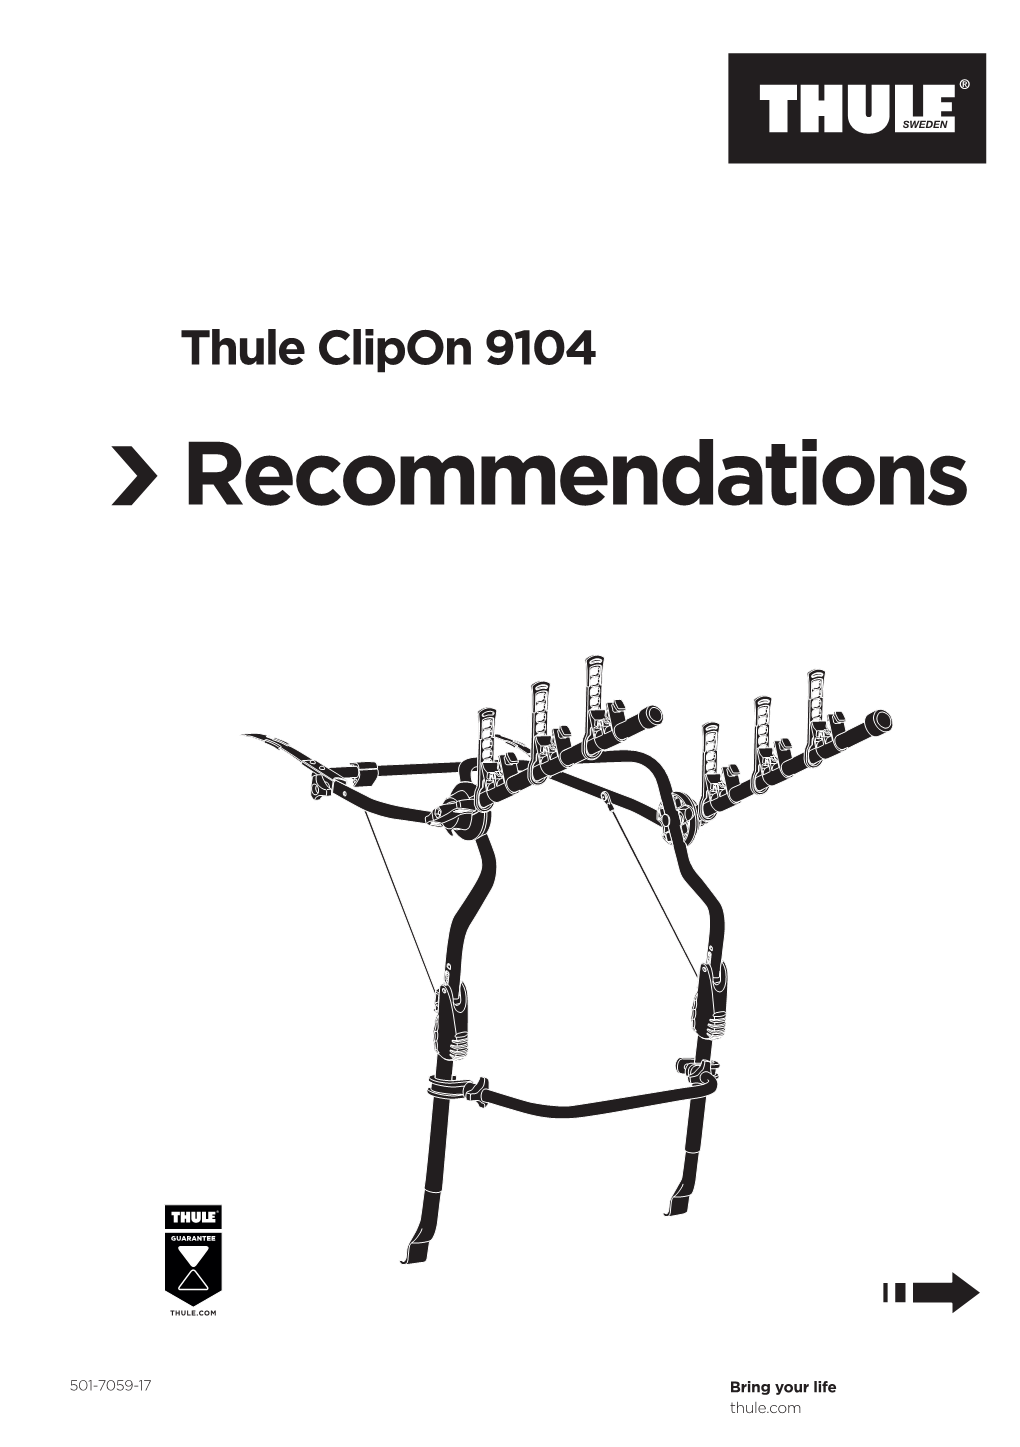 Thule Clipon 9104 Recommendations